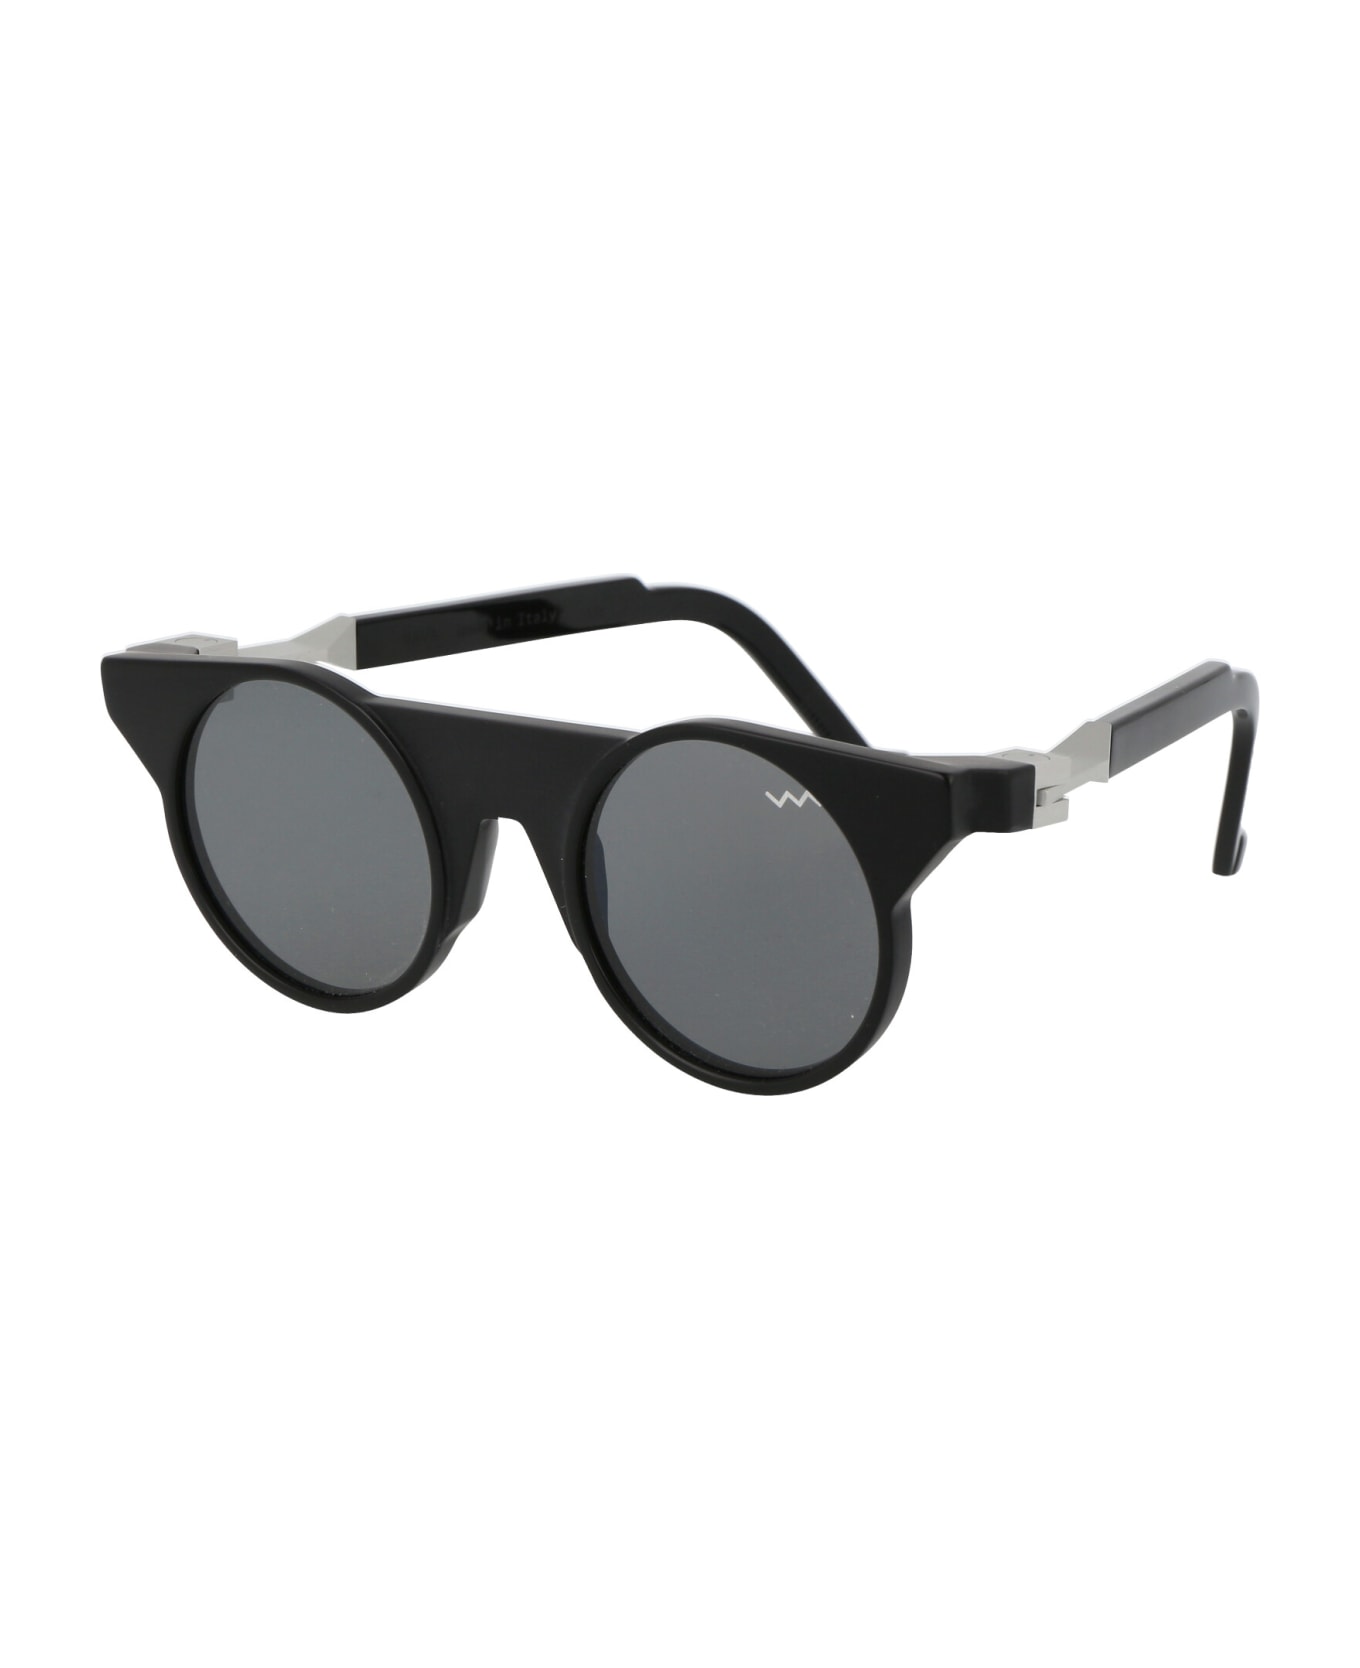 VAVA Bl0013 Sunglasses - BLACK SILVER LEX HINGES BLACK LENSES EURO